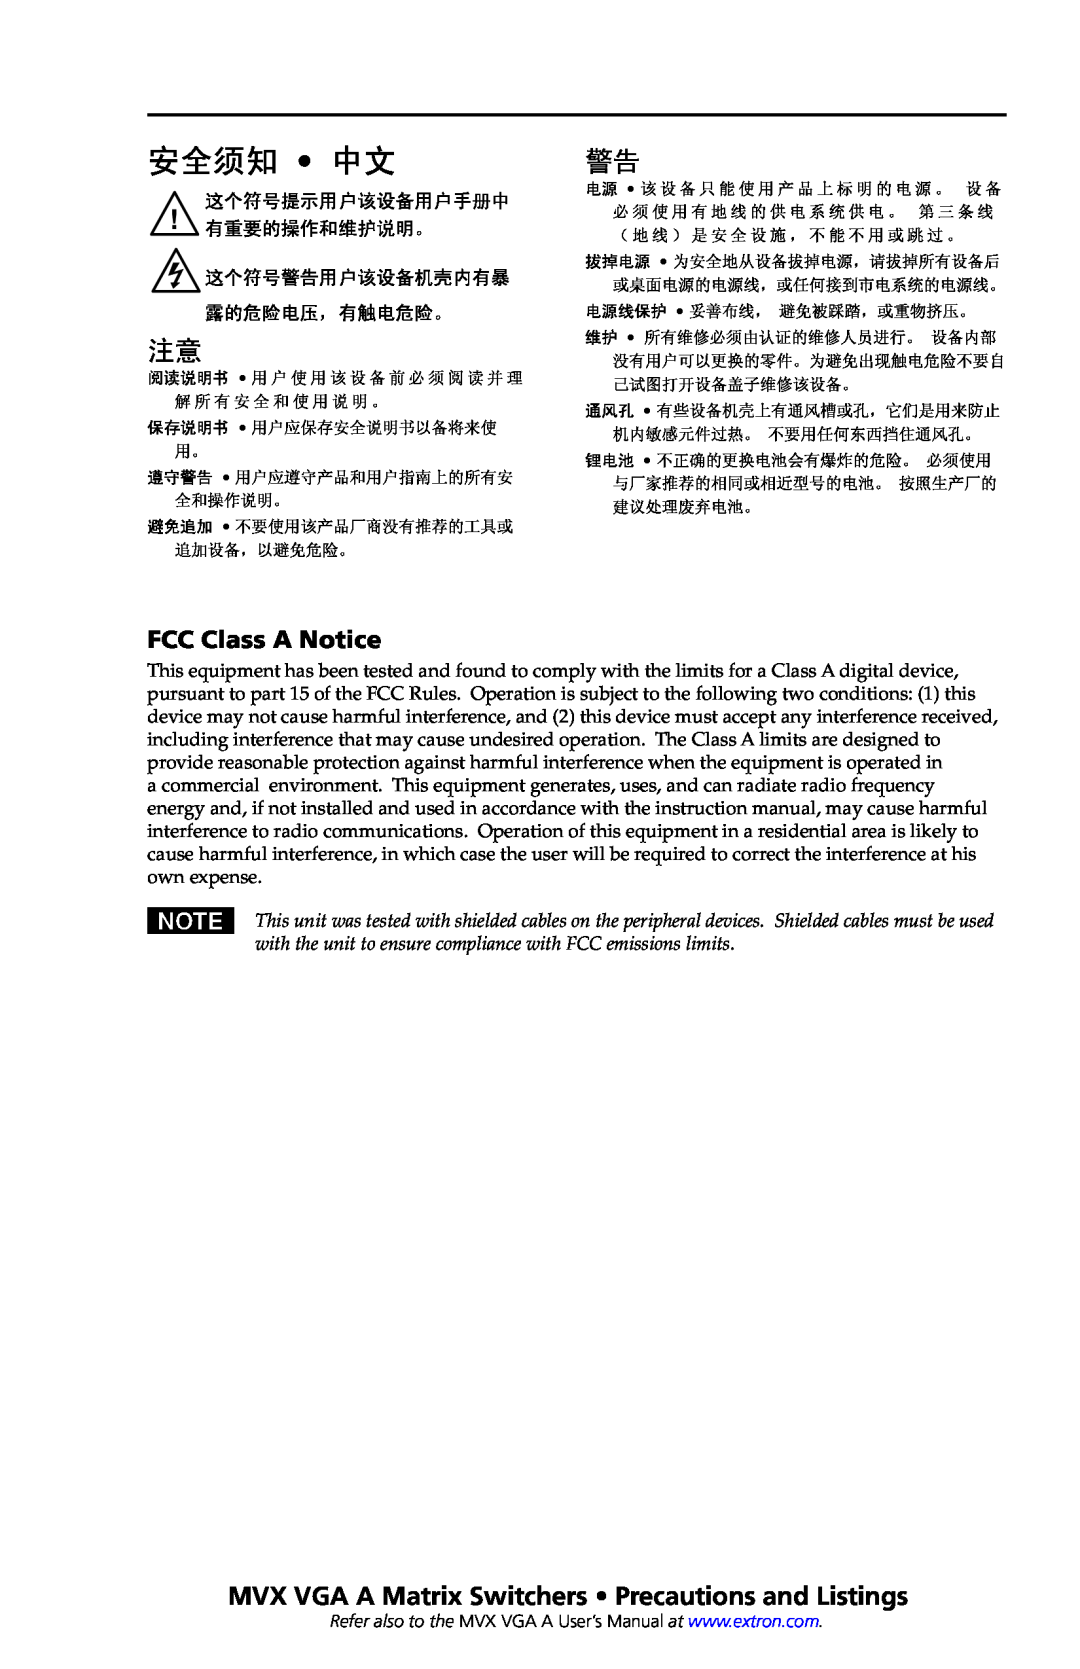 Extron electronic setup guide 安全须知 中文, MVX VGA A Matrix Switchers Precautions and Listings, FCC Class A Notice 